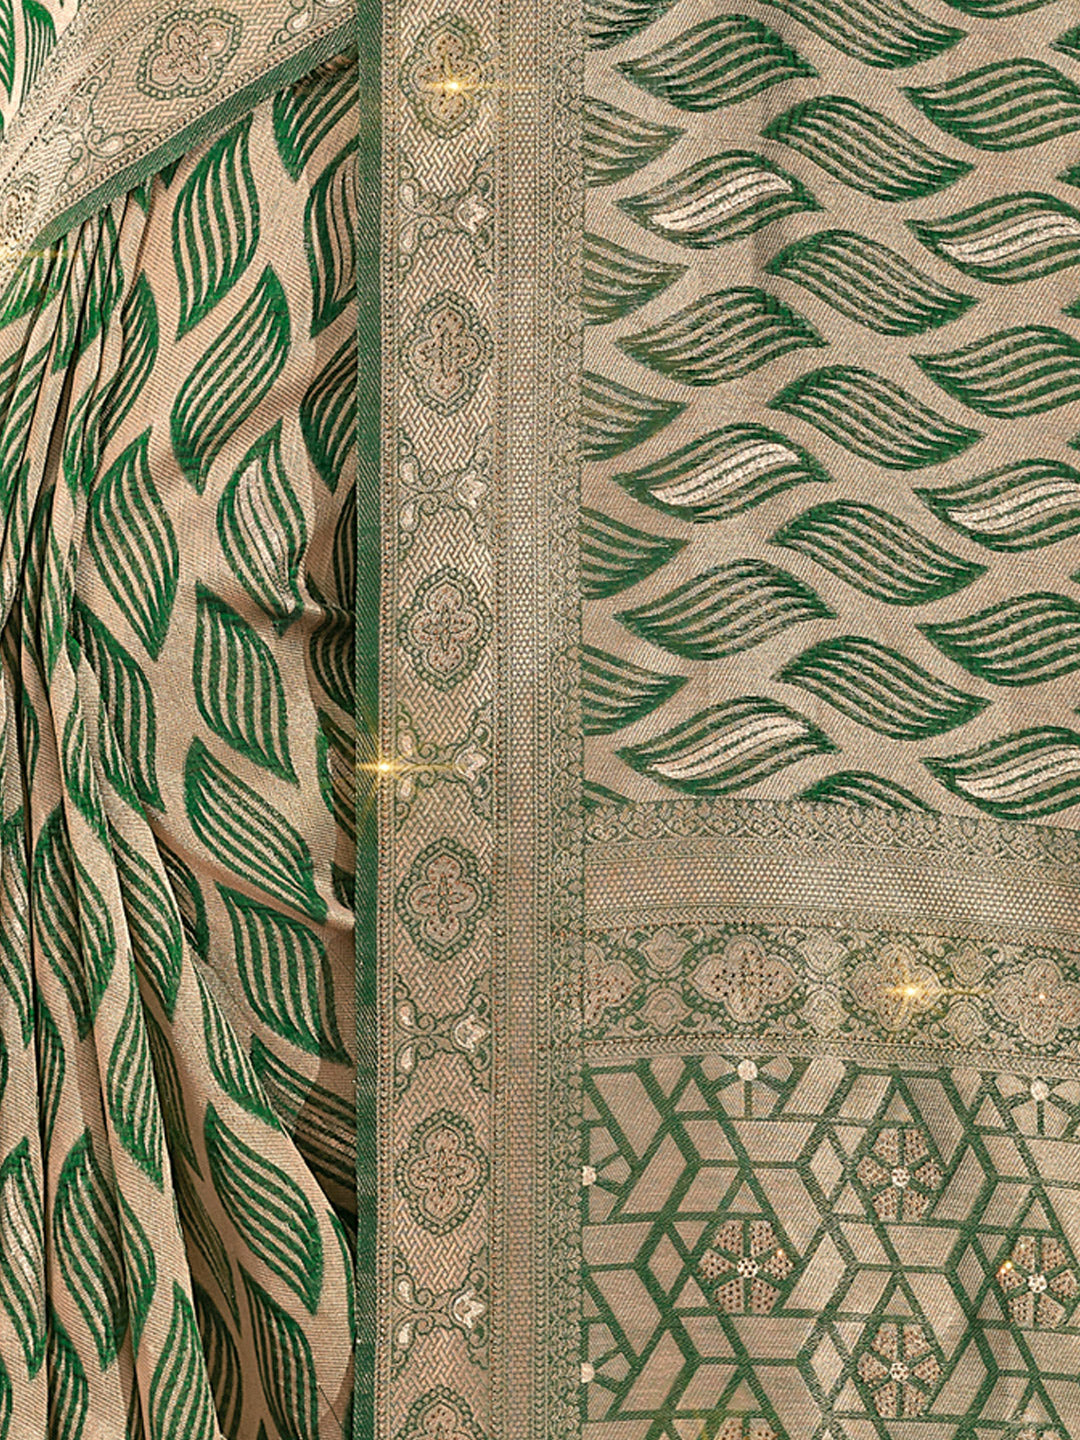 Women's Green ORGANZA Siroski Stone Work Traditional Tassle Saree - Sangam Prints